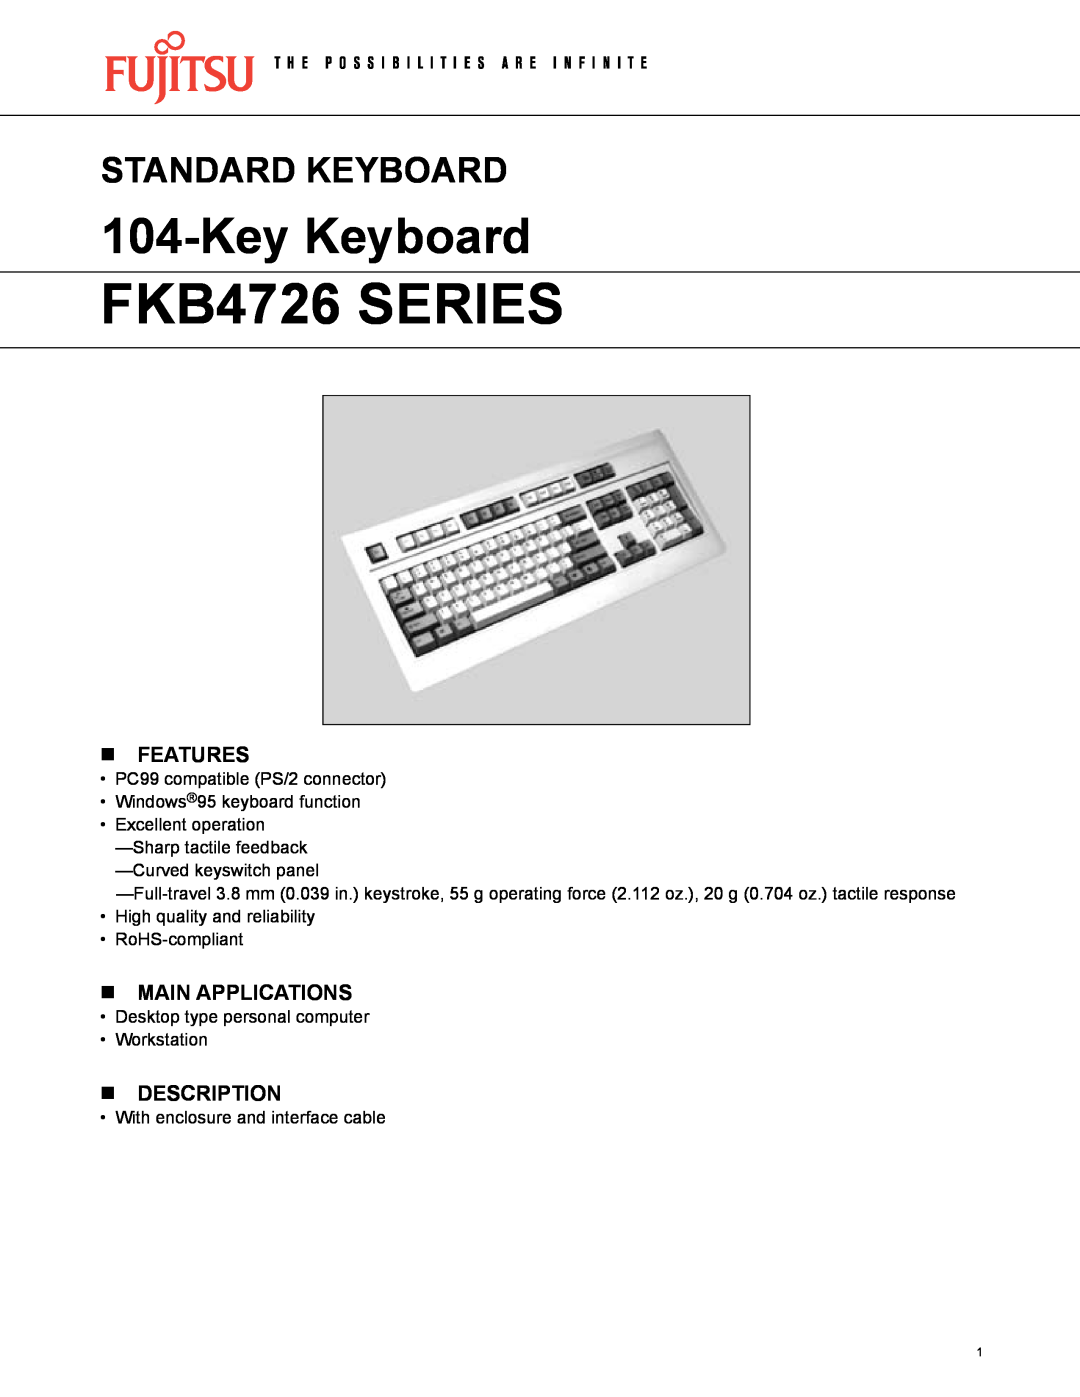 Fujitsu FKB4726 SERIES manual n FEATURES, n MAIN APPLICATIONS, n DESCRIPTION, Key Keyboard, Standard Keyboard 